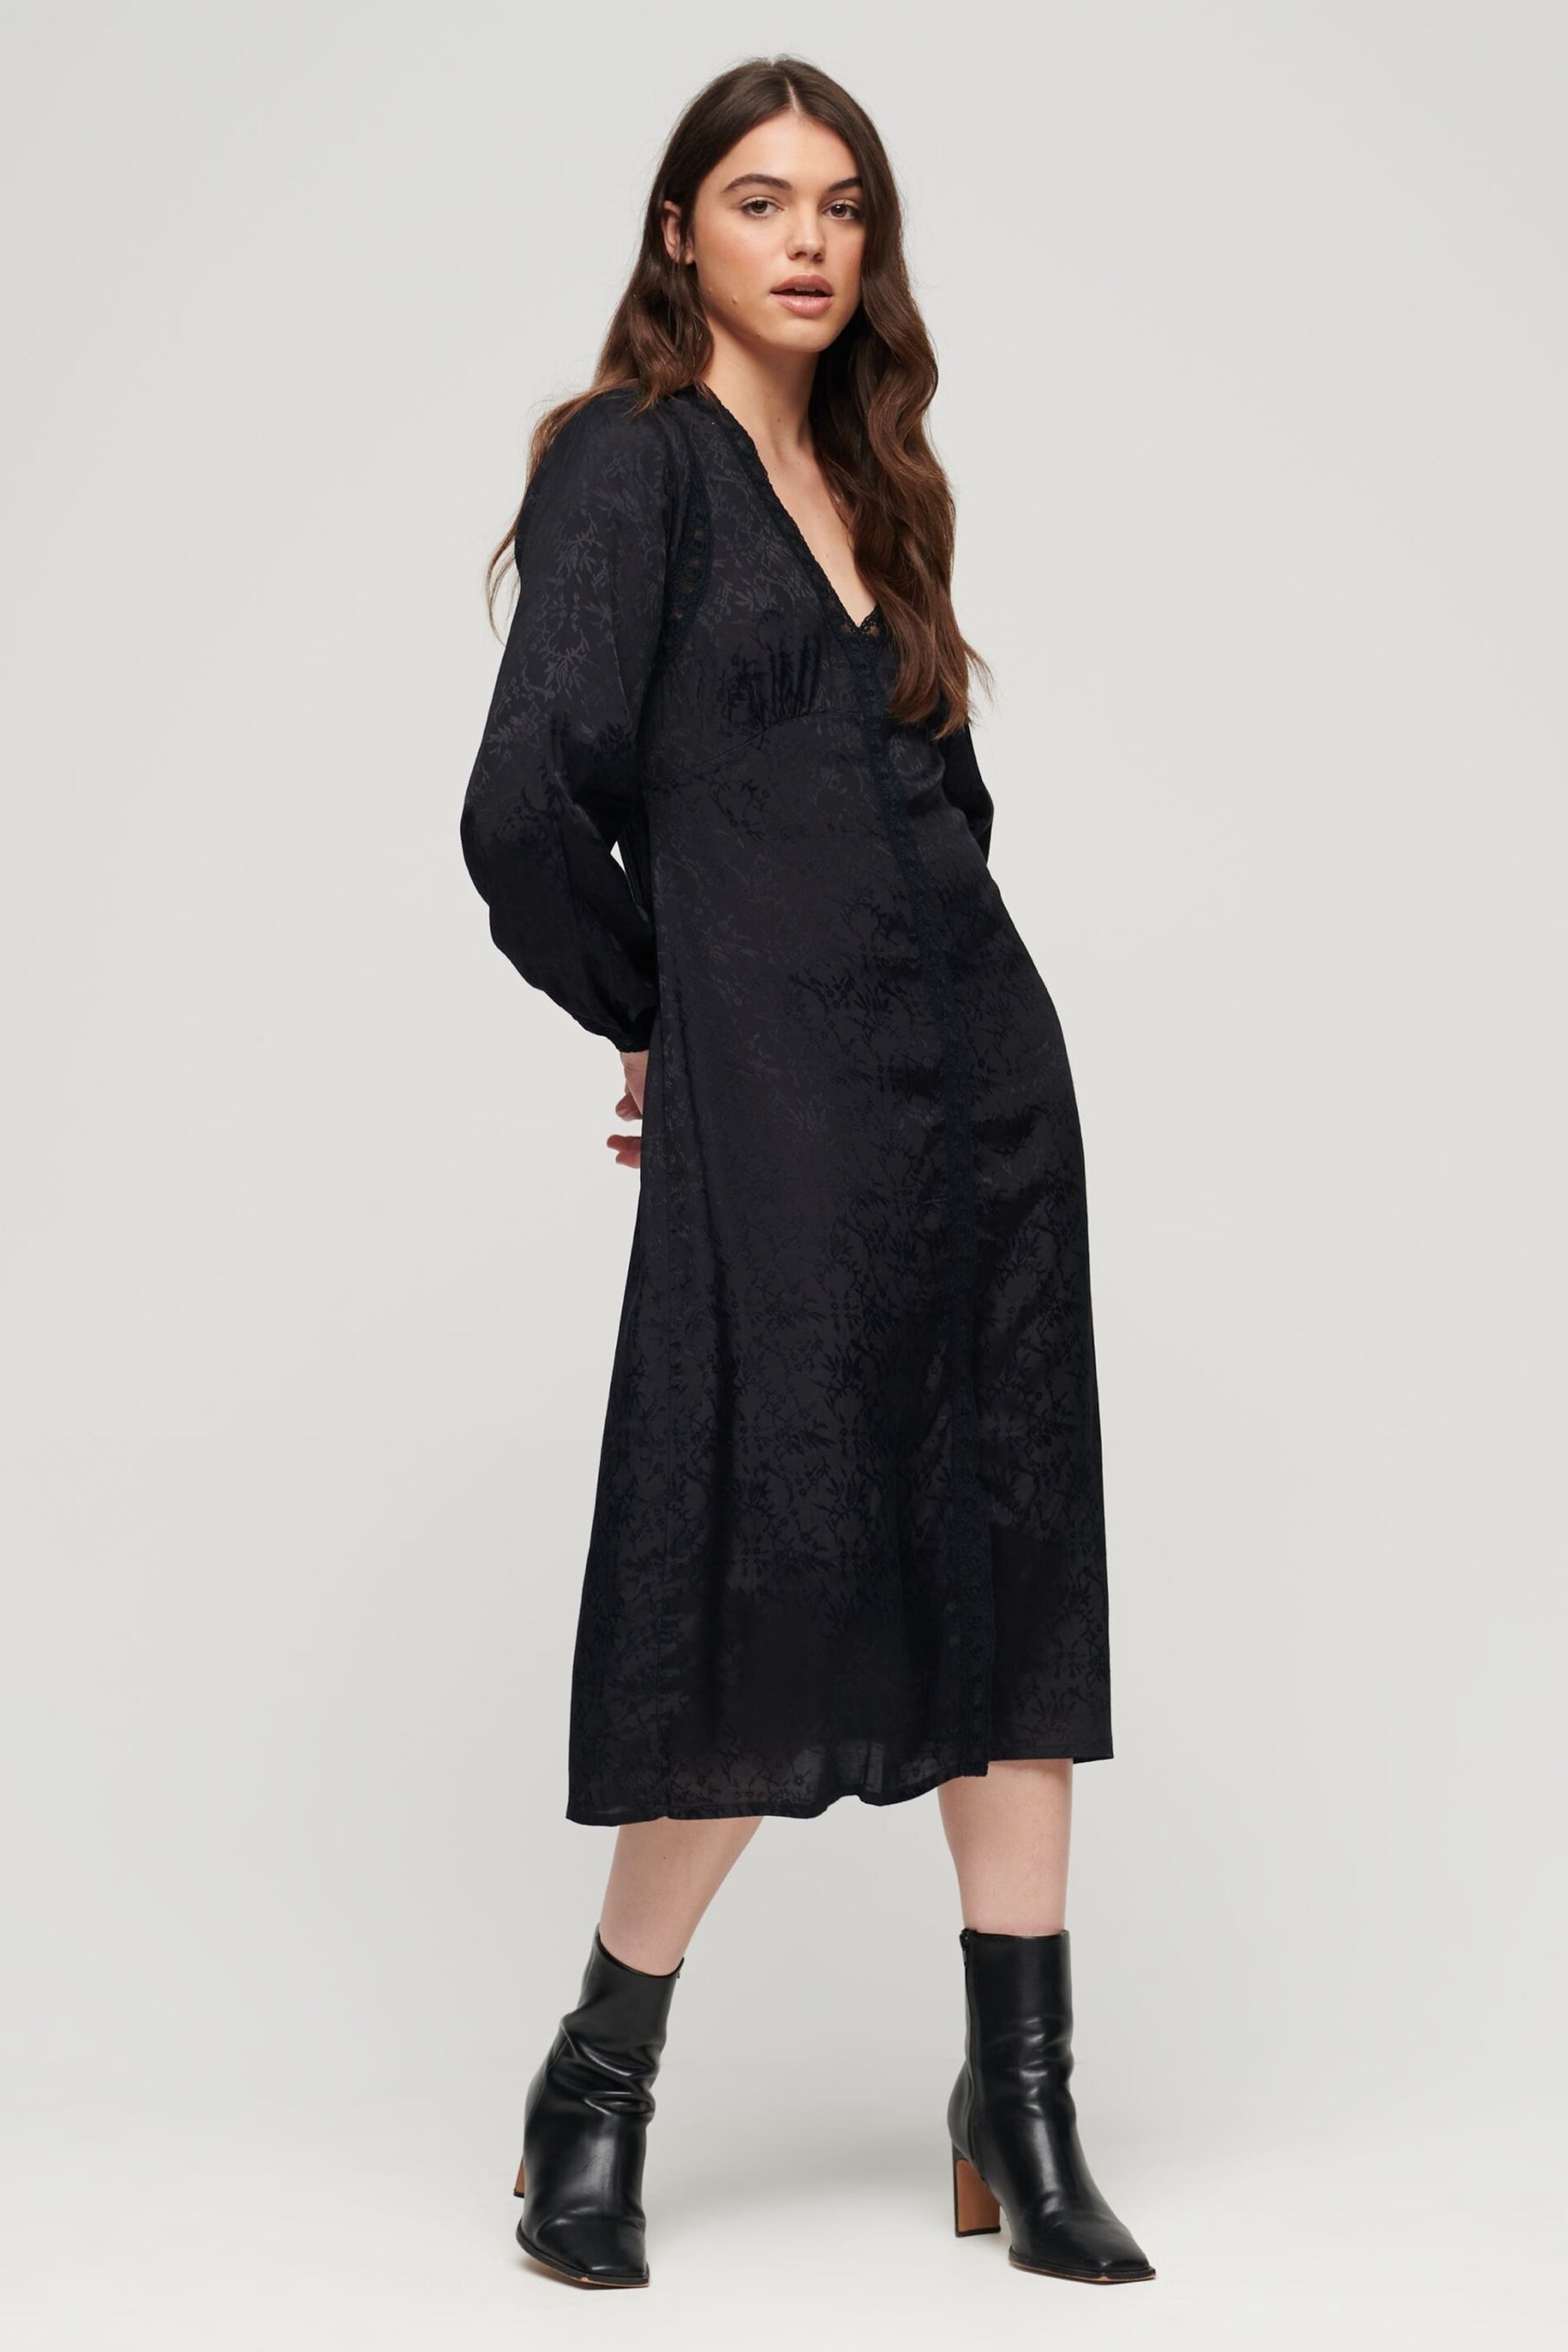 Superdry Black Lace Trim Midi Dress - Image 2 of 6